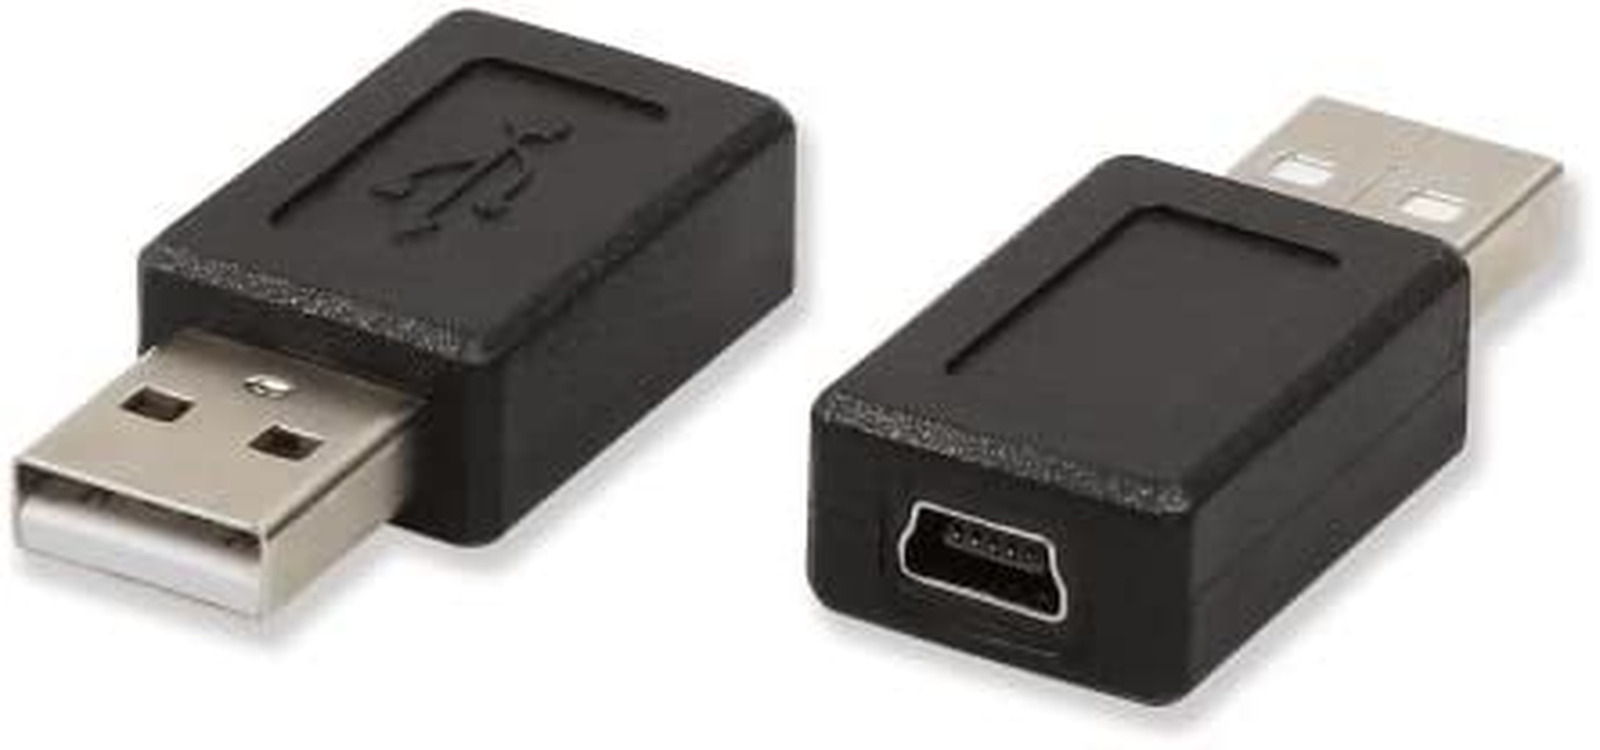 2 Pack USB 2.0 a Male to USB B Mini 5 Pin Female Adapter Converter